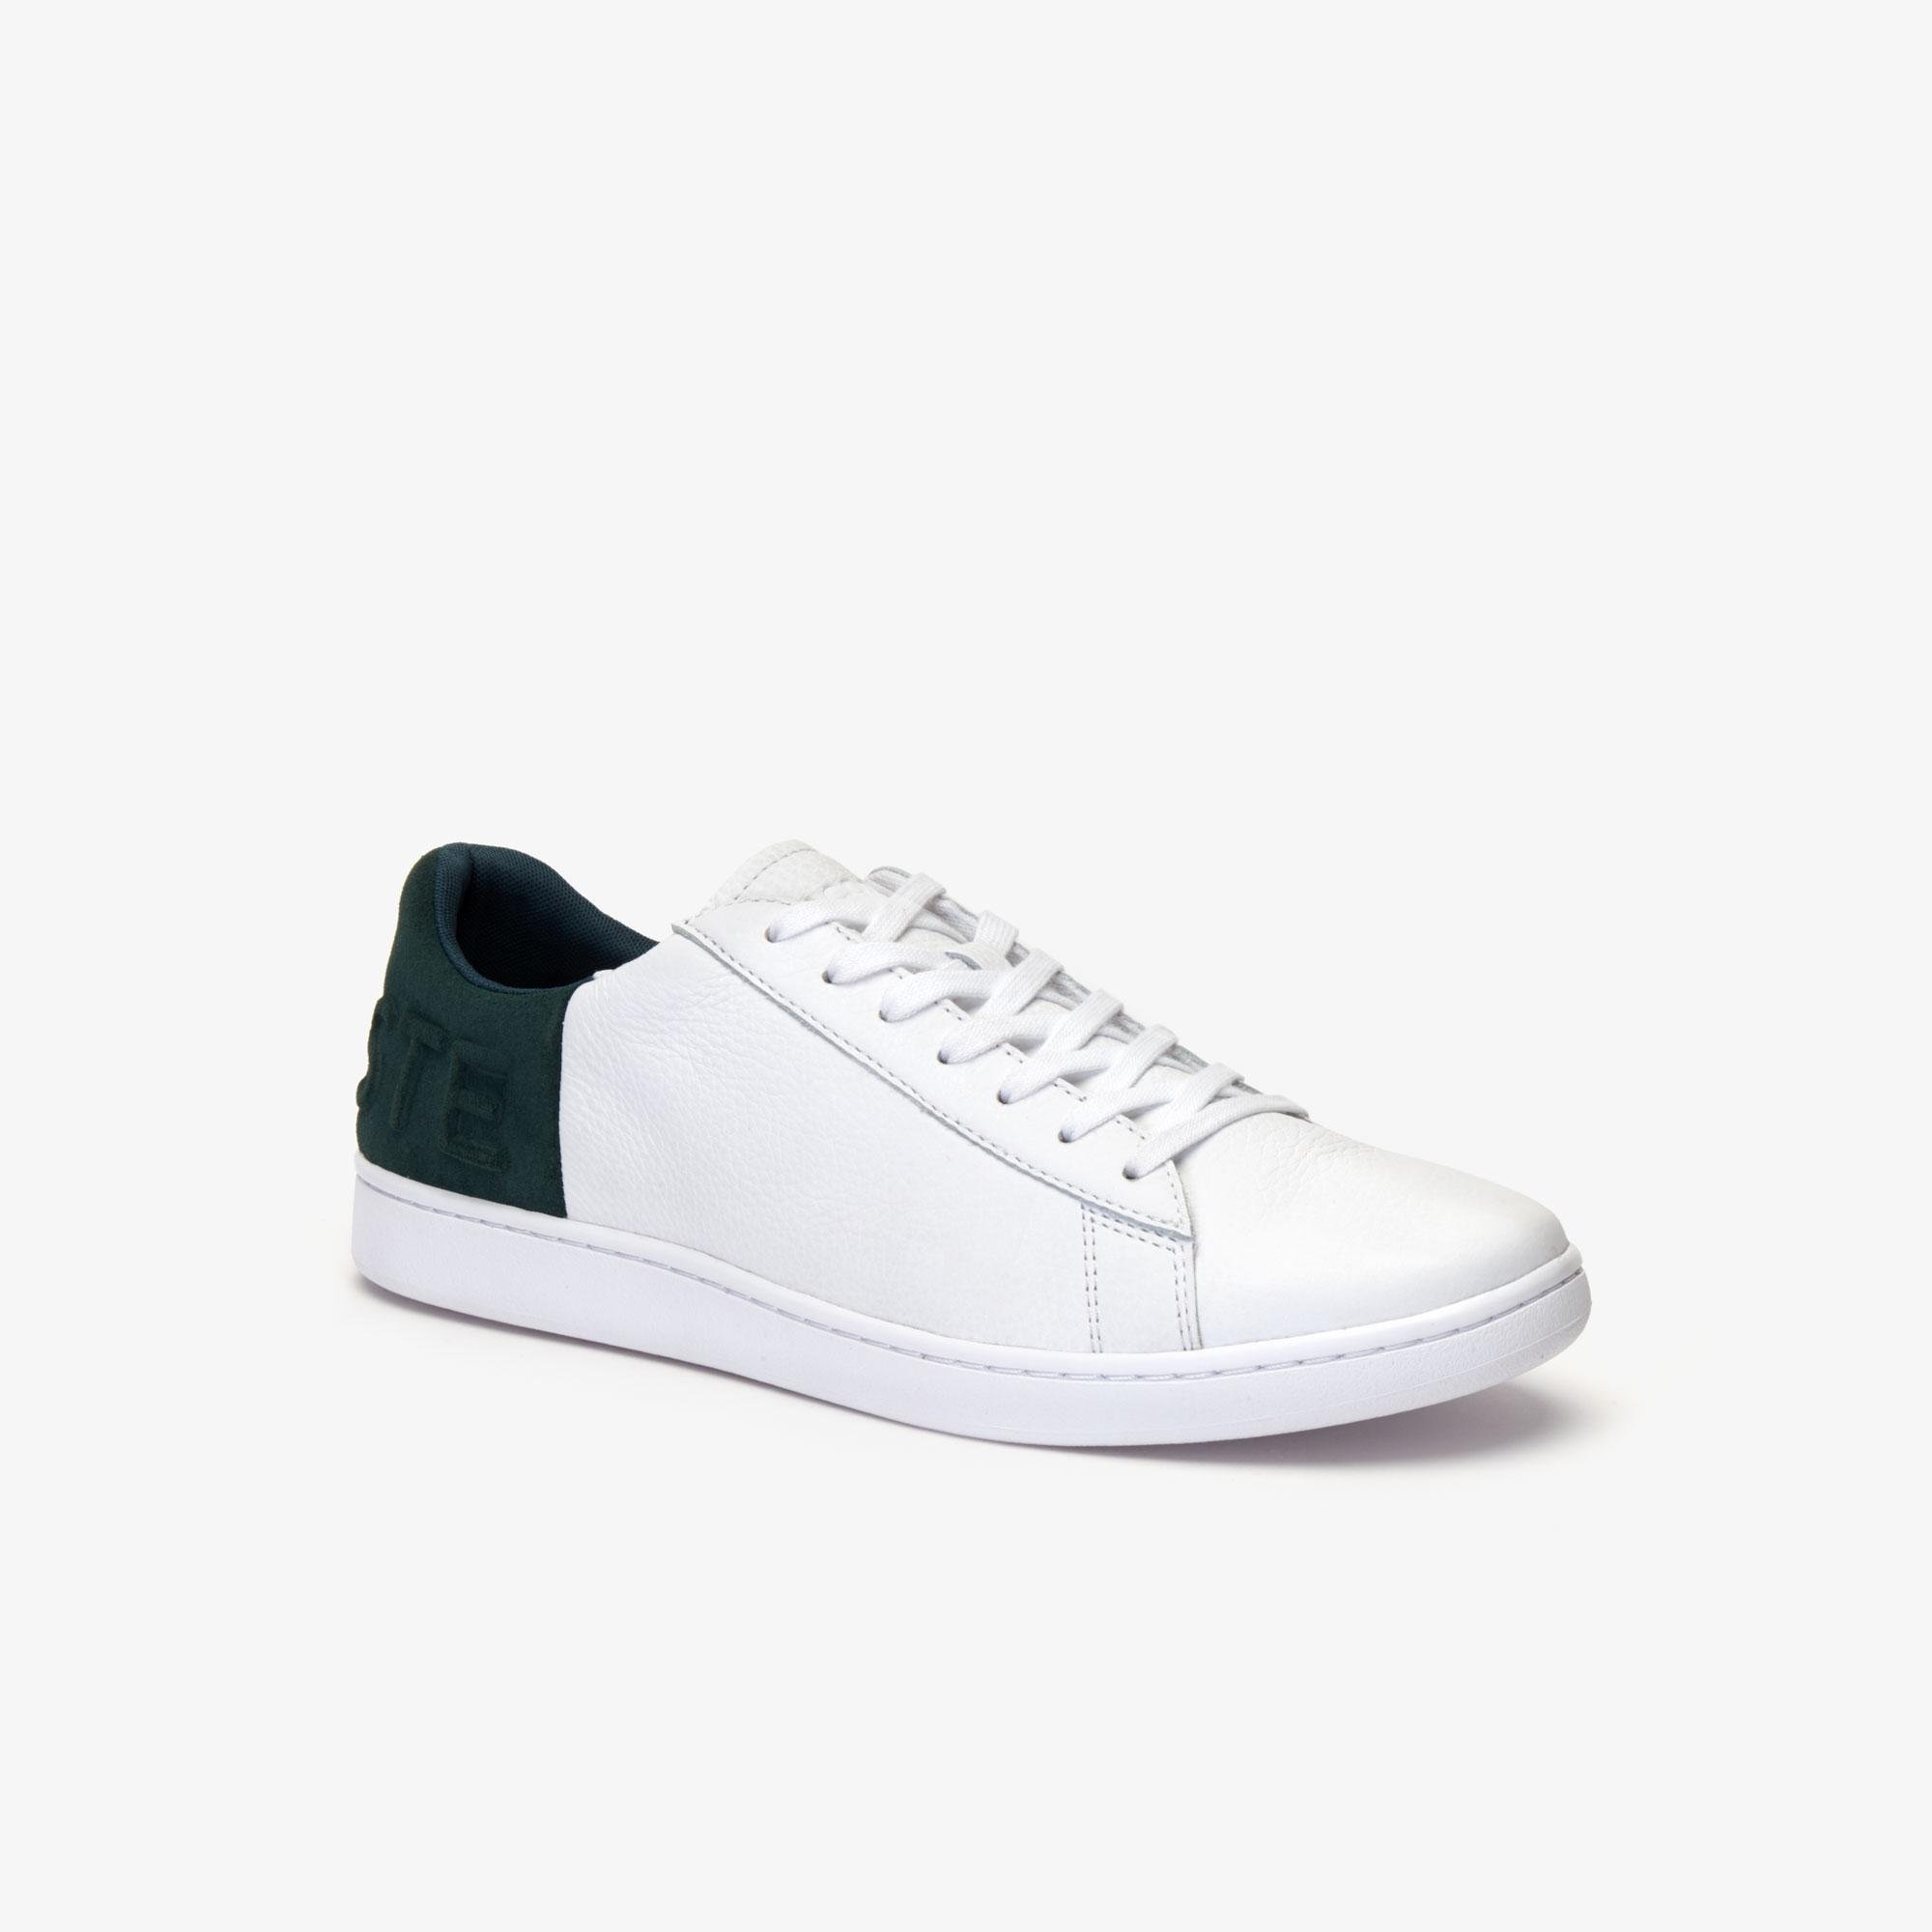 Lacoste Carnaby Evo 419 2 Sma Erkek Beyaz - Koyu Yeşil Sneaker